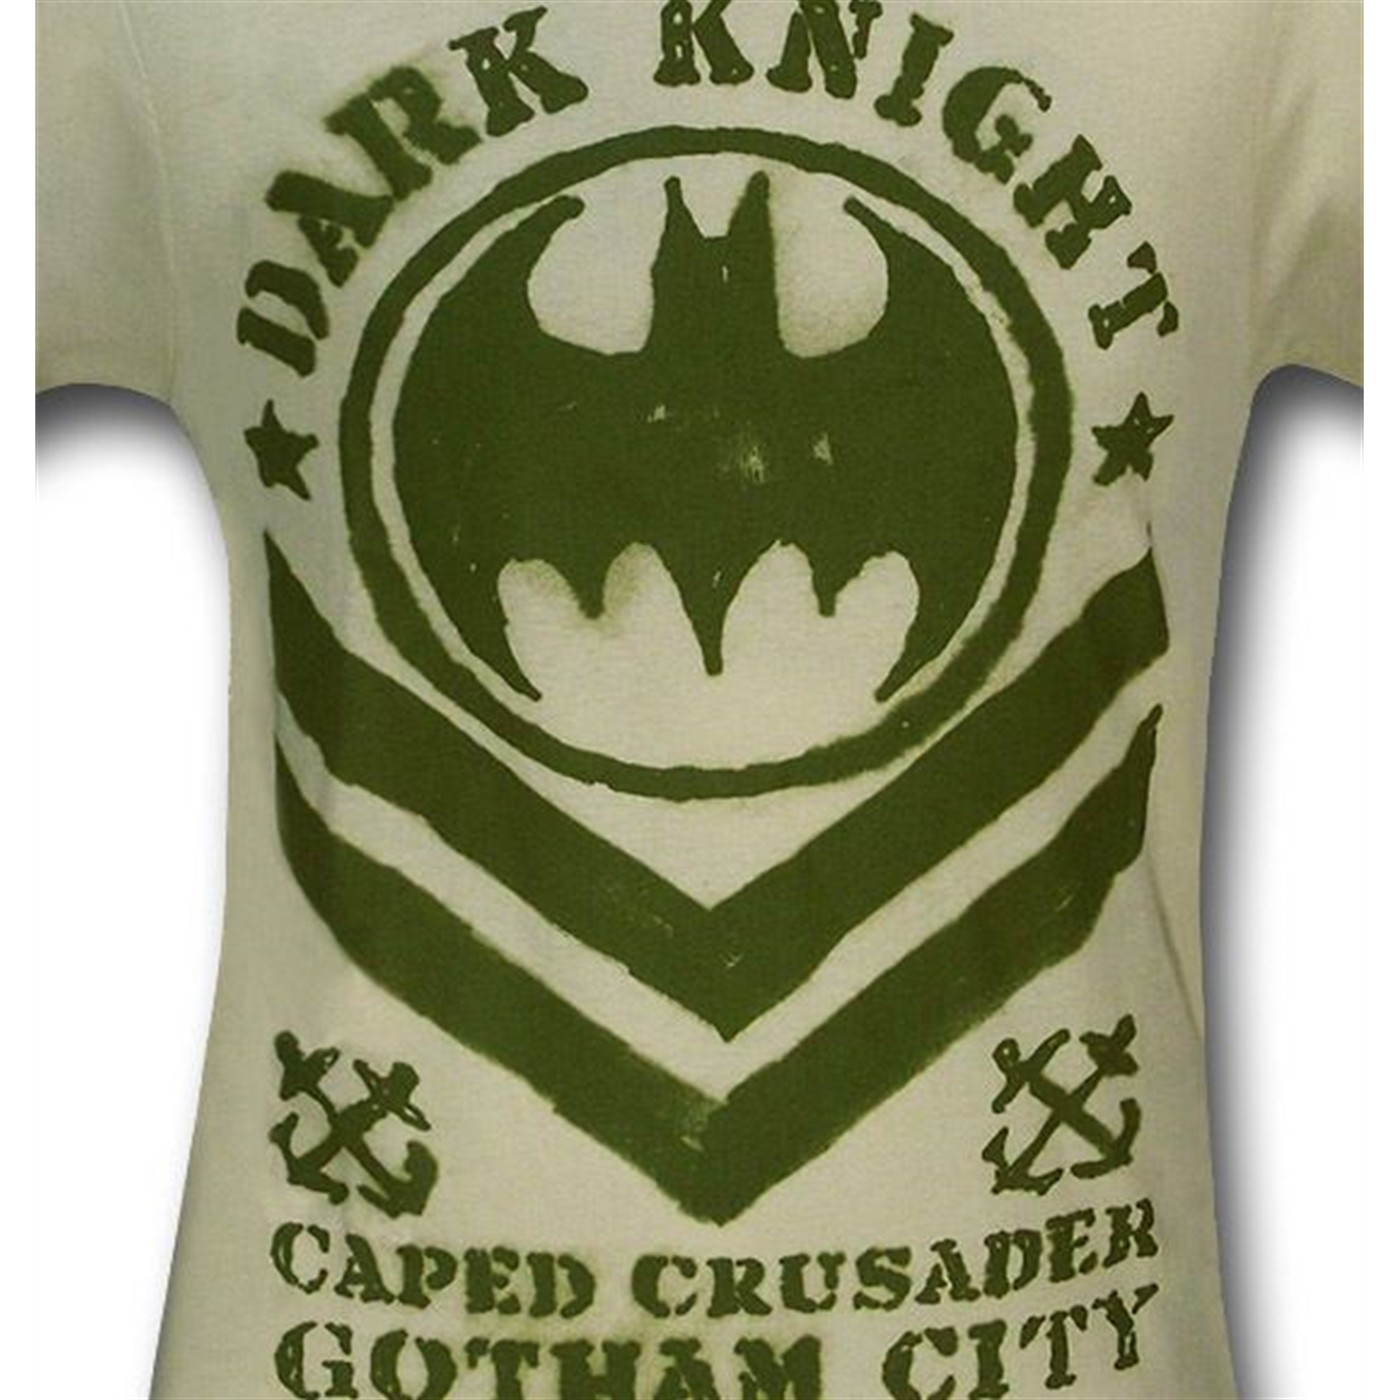 Batman Caped Crusader Chevron T-Shirt